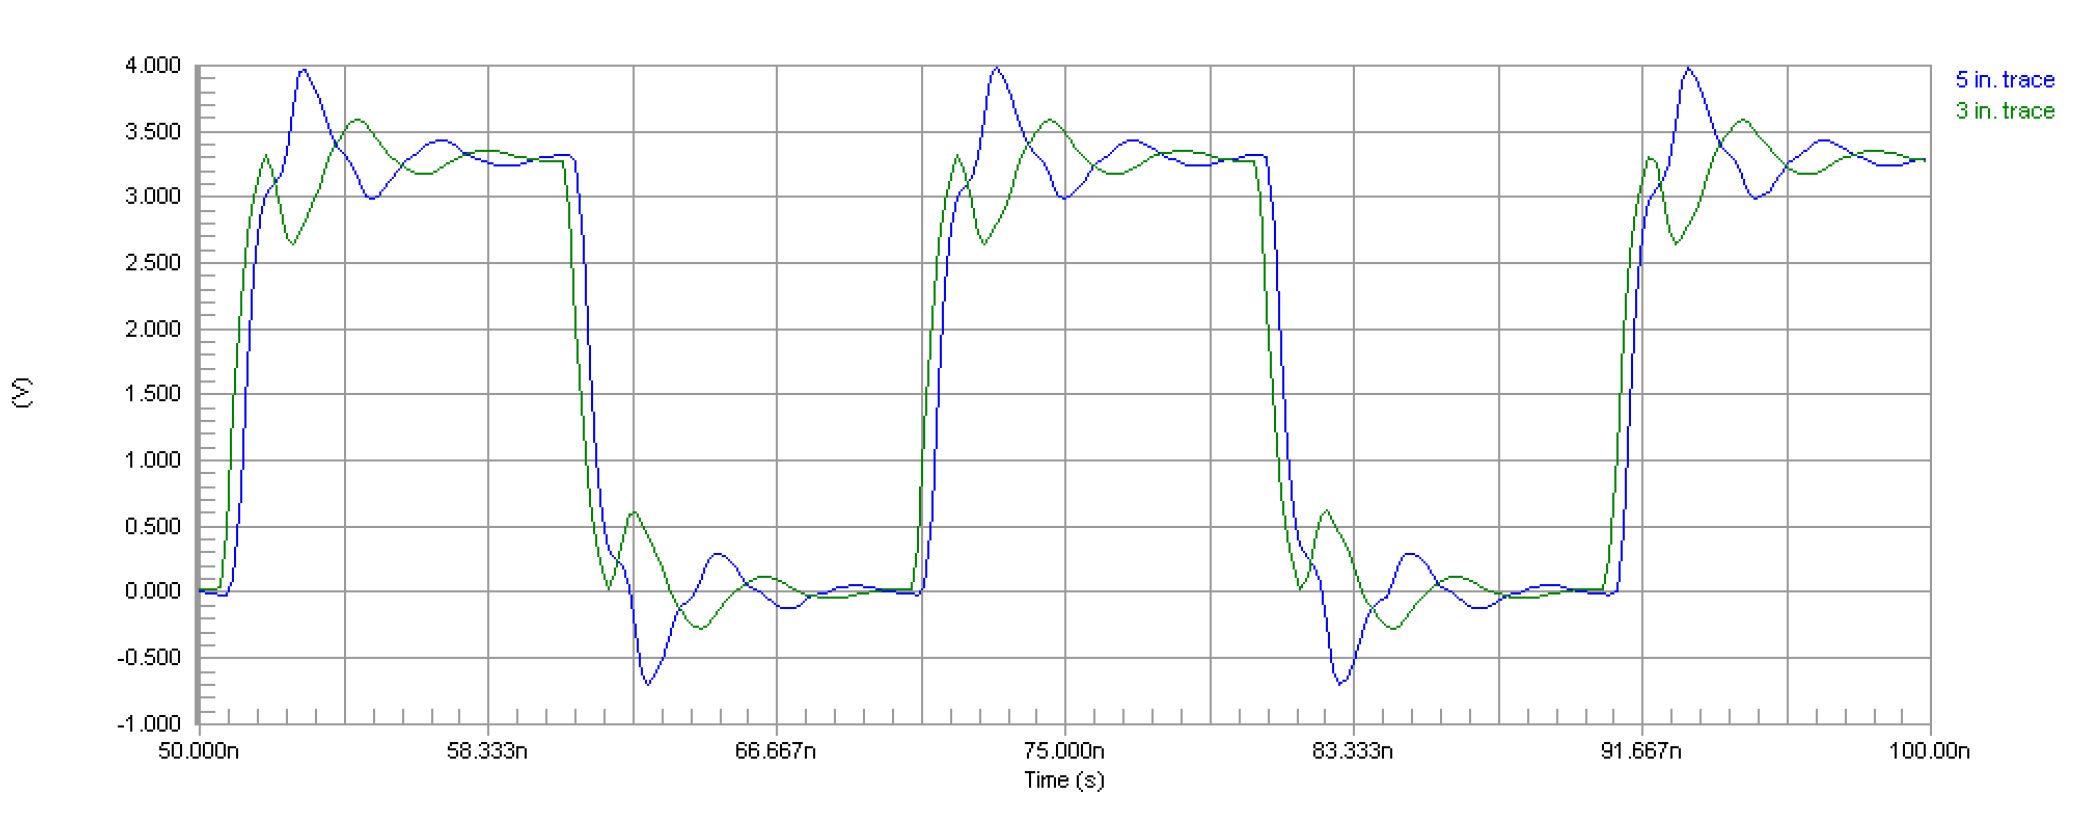 Altium Designer simulation waveform (at both loads) for SiT8208 driving two transmission lines of different length.